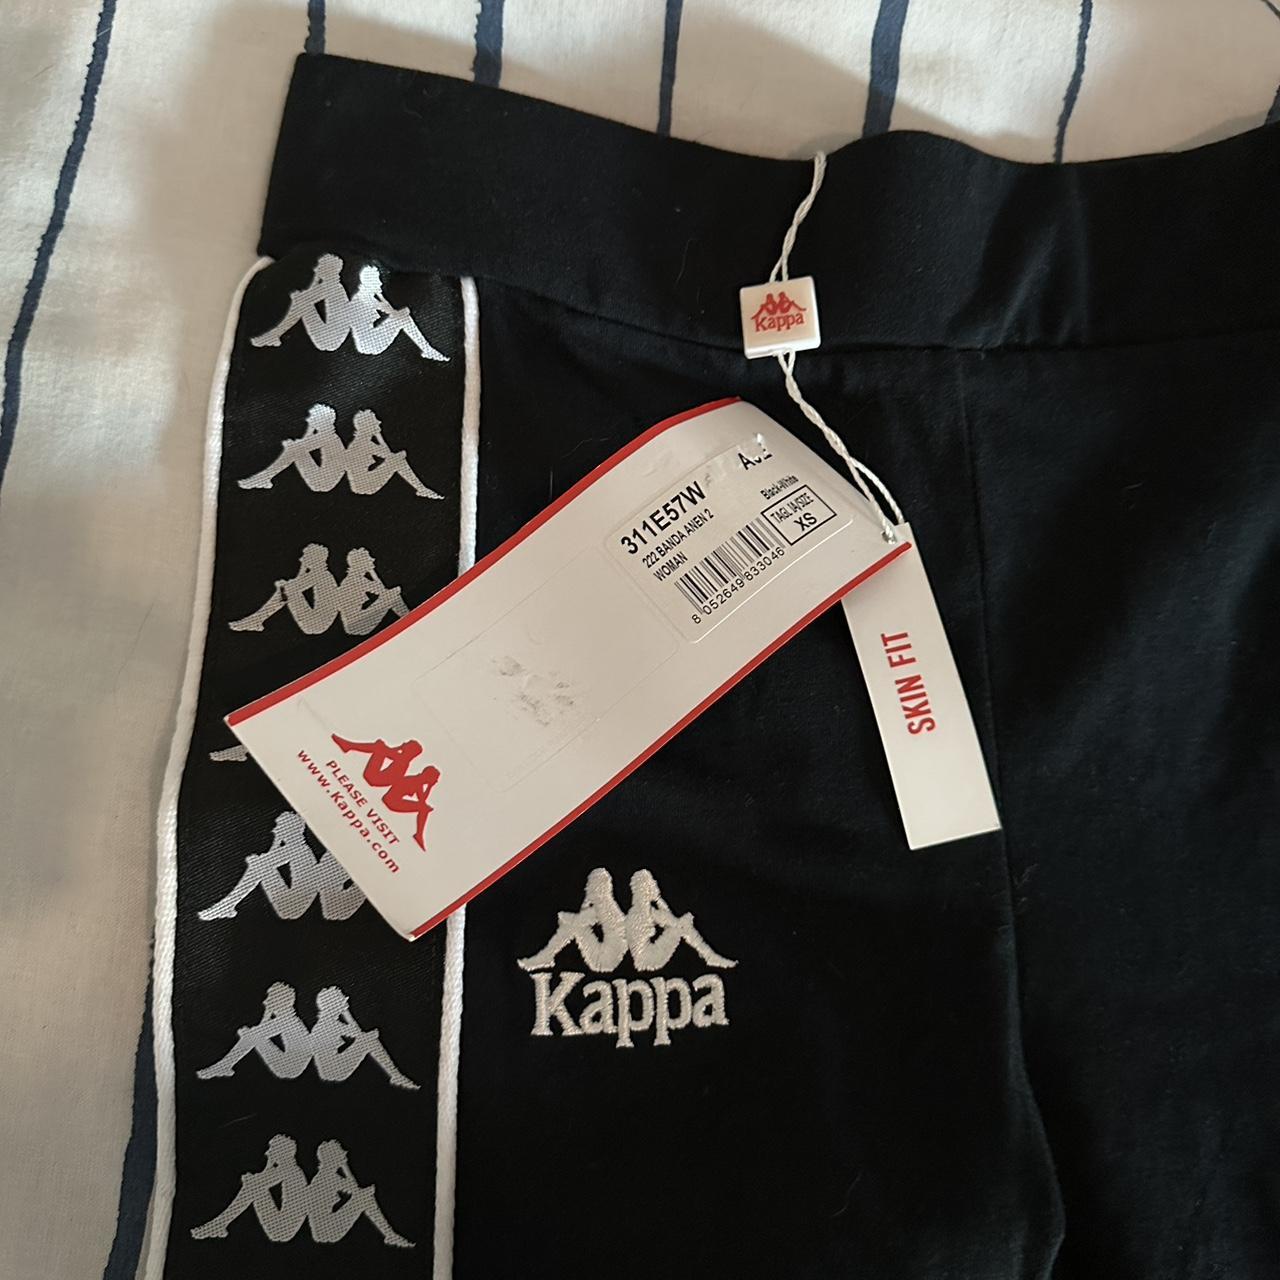 Kappa 222 BANDA ANEN 2 LEGGINGS - BLACK WHITE Brand... - Depop